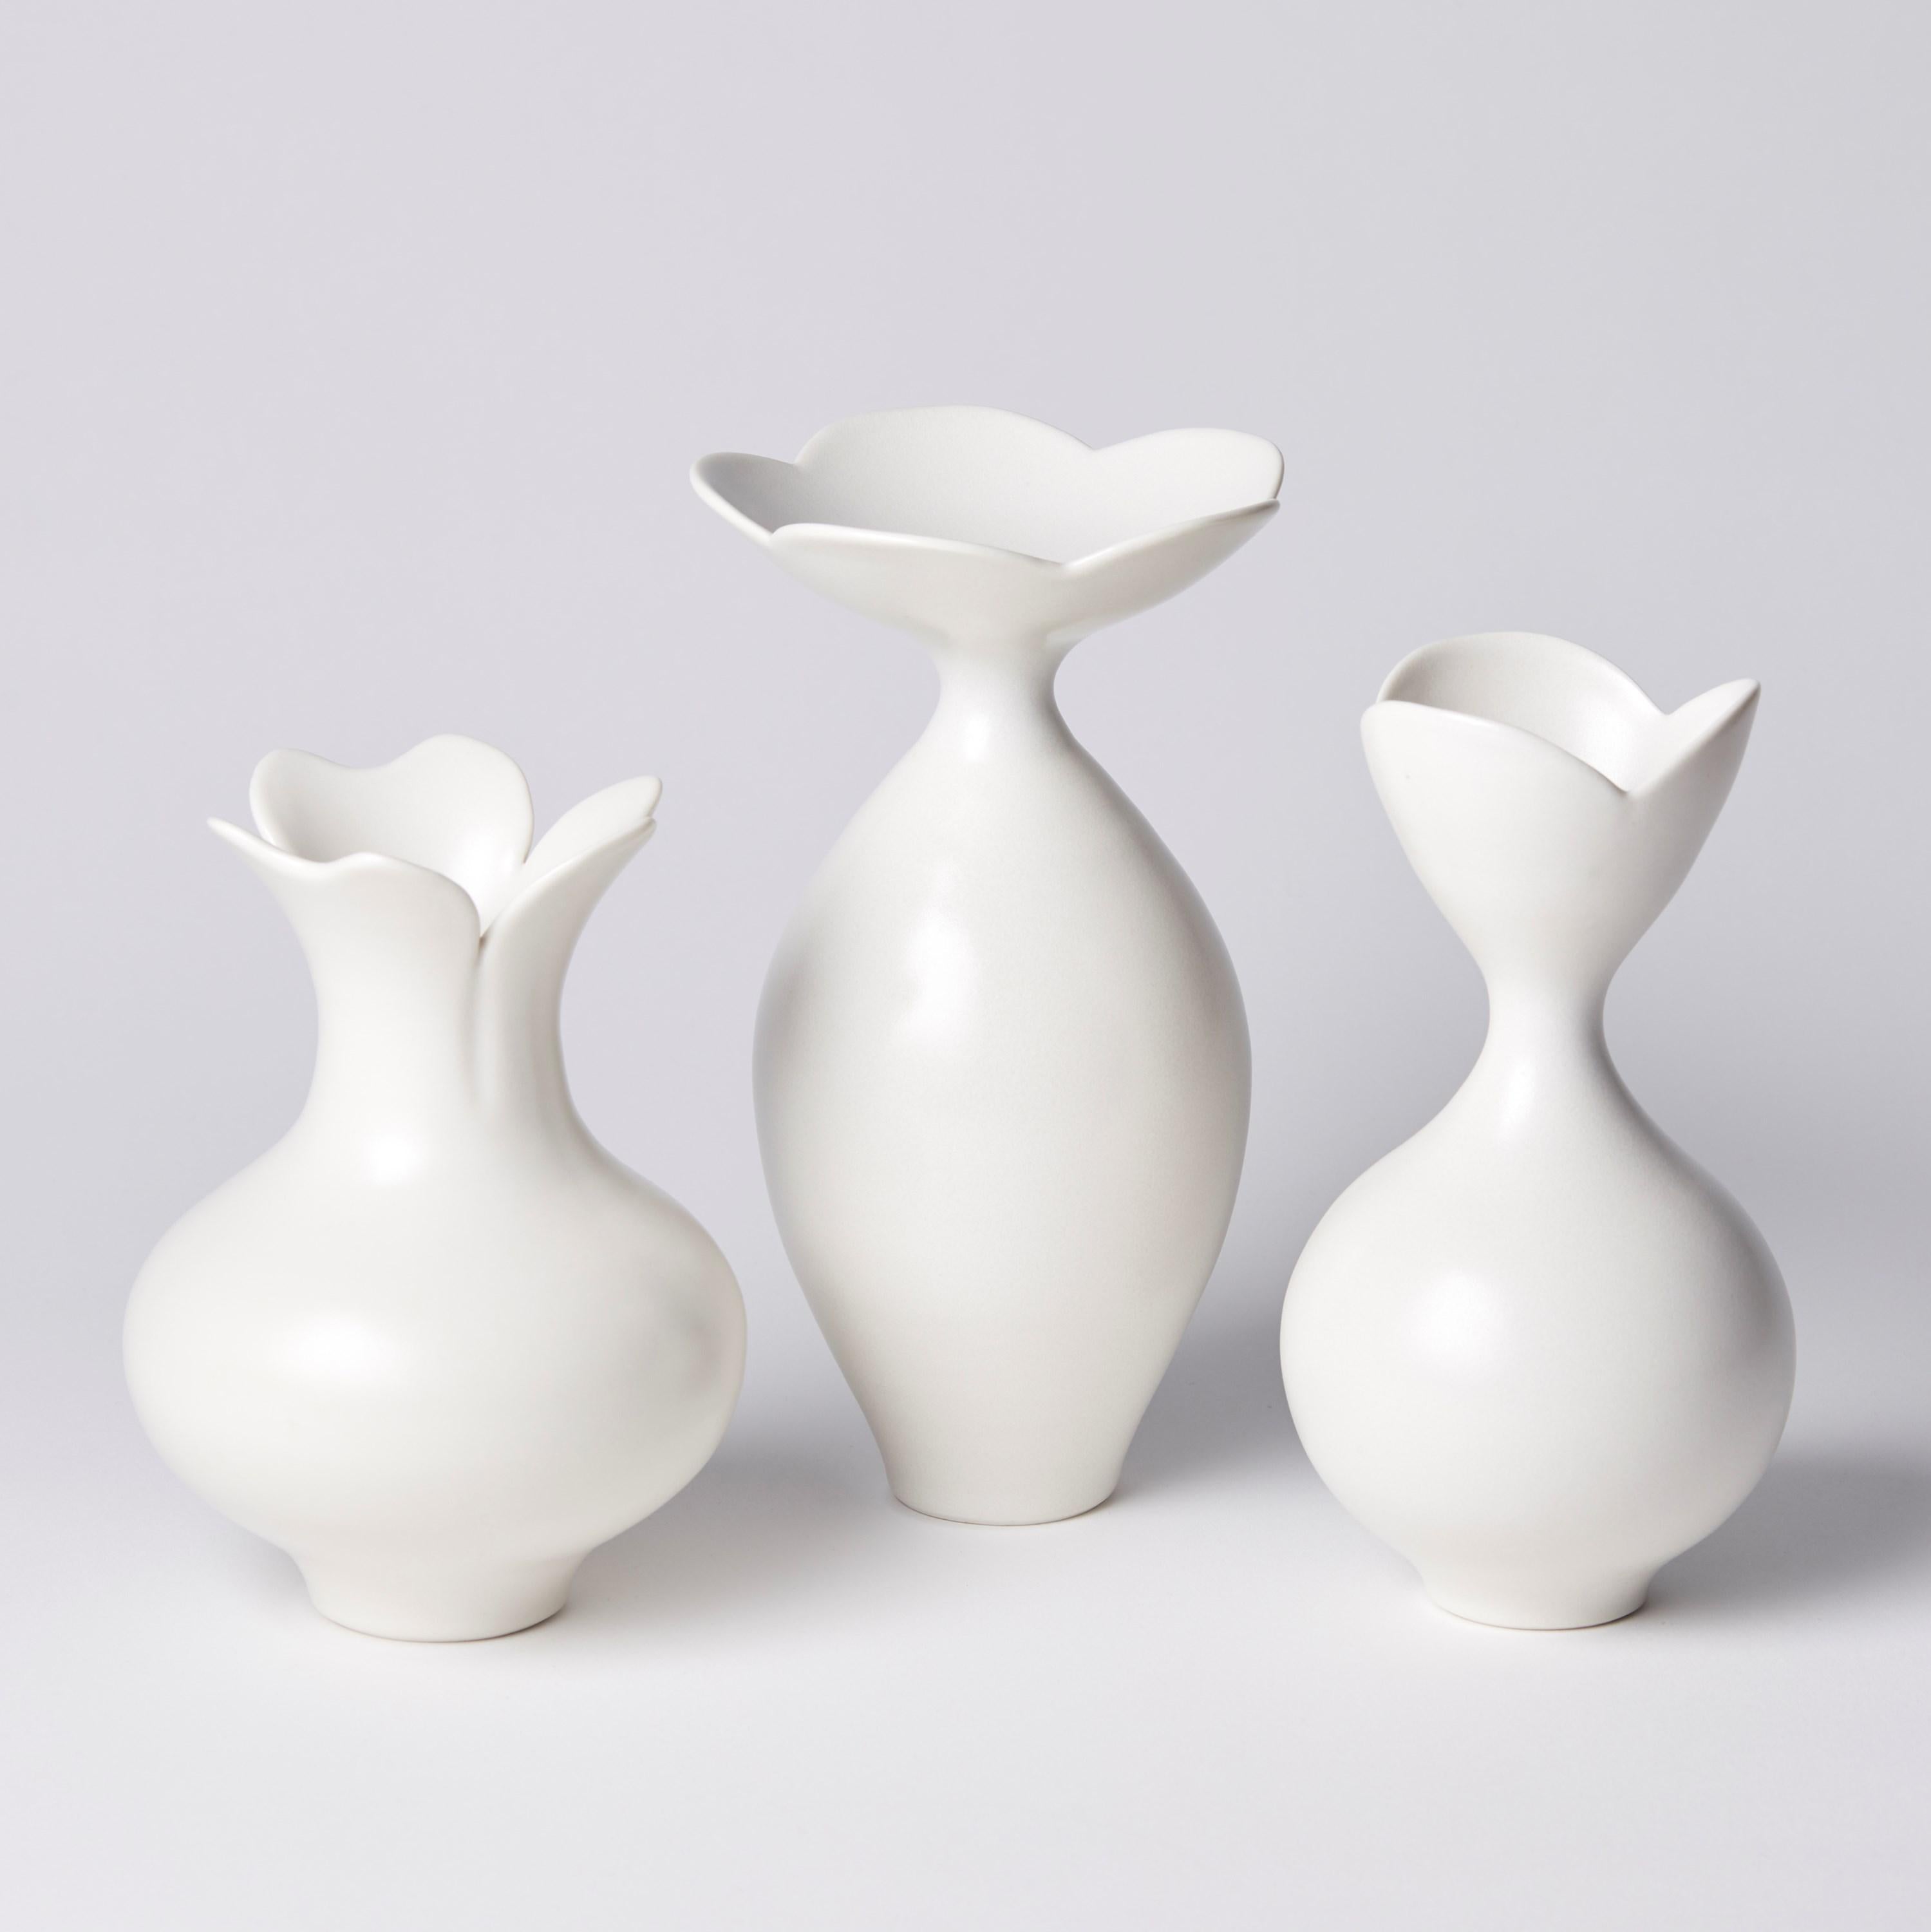 Organic Modern Vase with Tri Lobed Rim I, a Unique White Porcelain Vase by Vivienne Foley